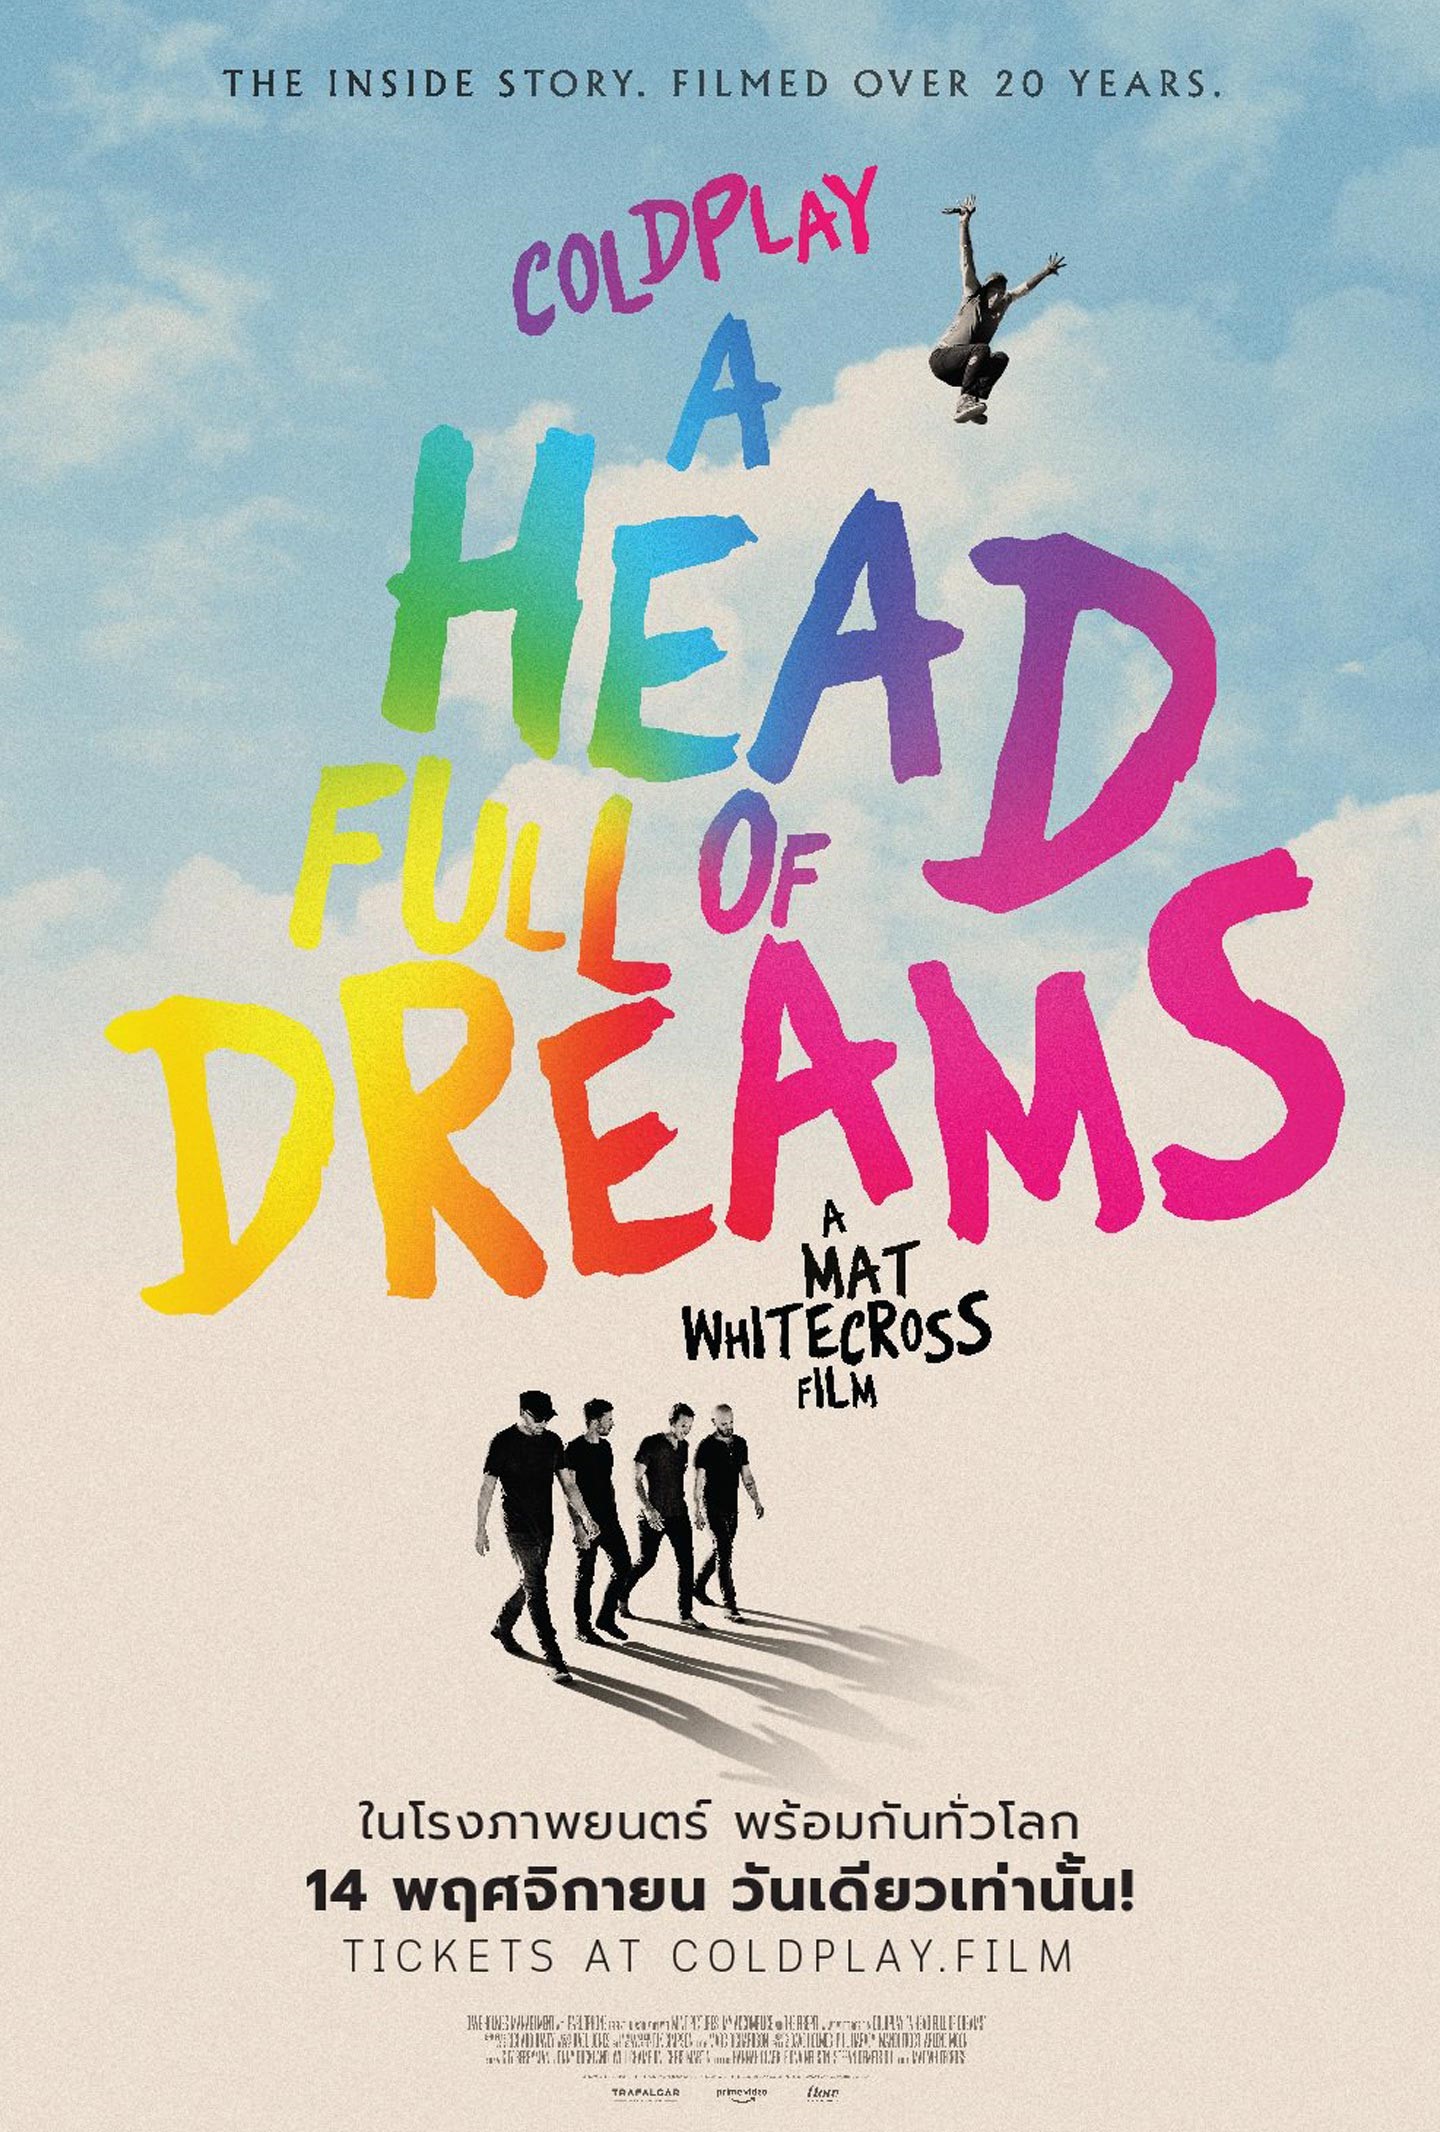 Coldplay: A Head Full of Dreams (2018) โคลด์เพลย์ อะเฮดฟูลออฟดรีมส์